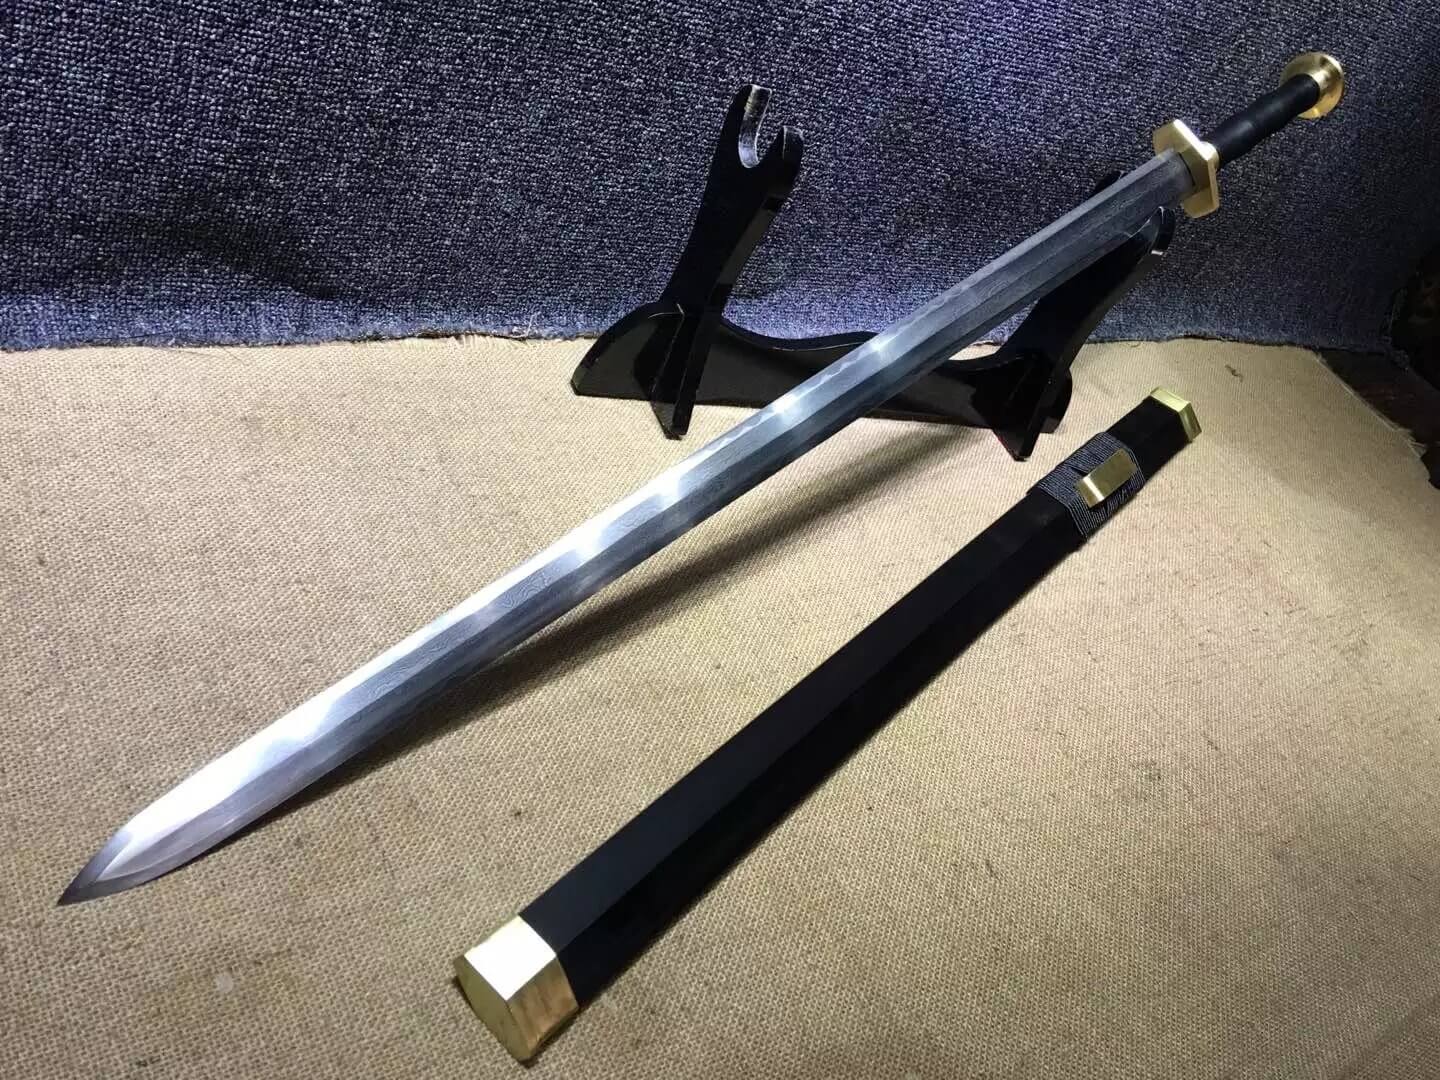 Loong sword,Han jian,Damascus steel blade,Black scabbard,Brass,Length 38" - Chinese sword shop